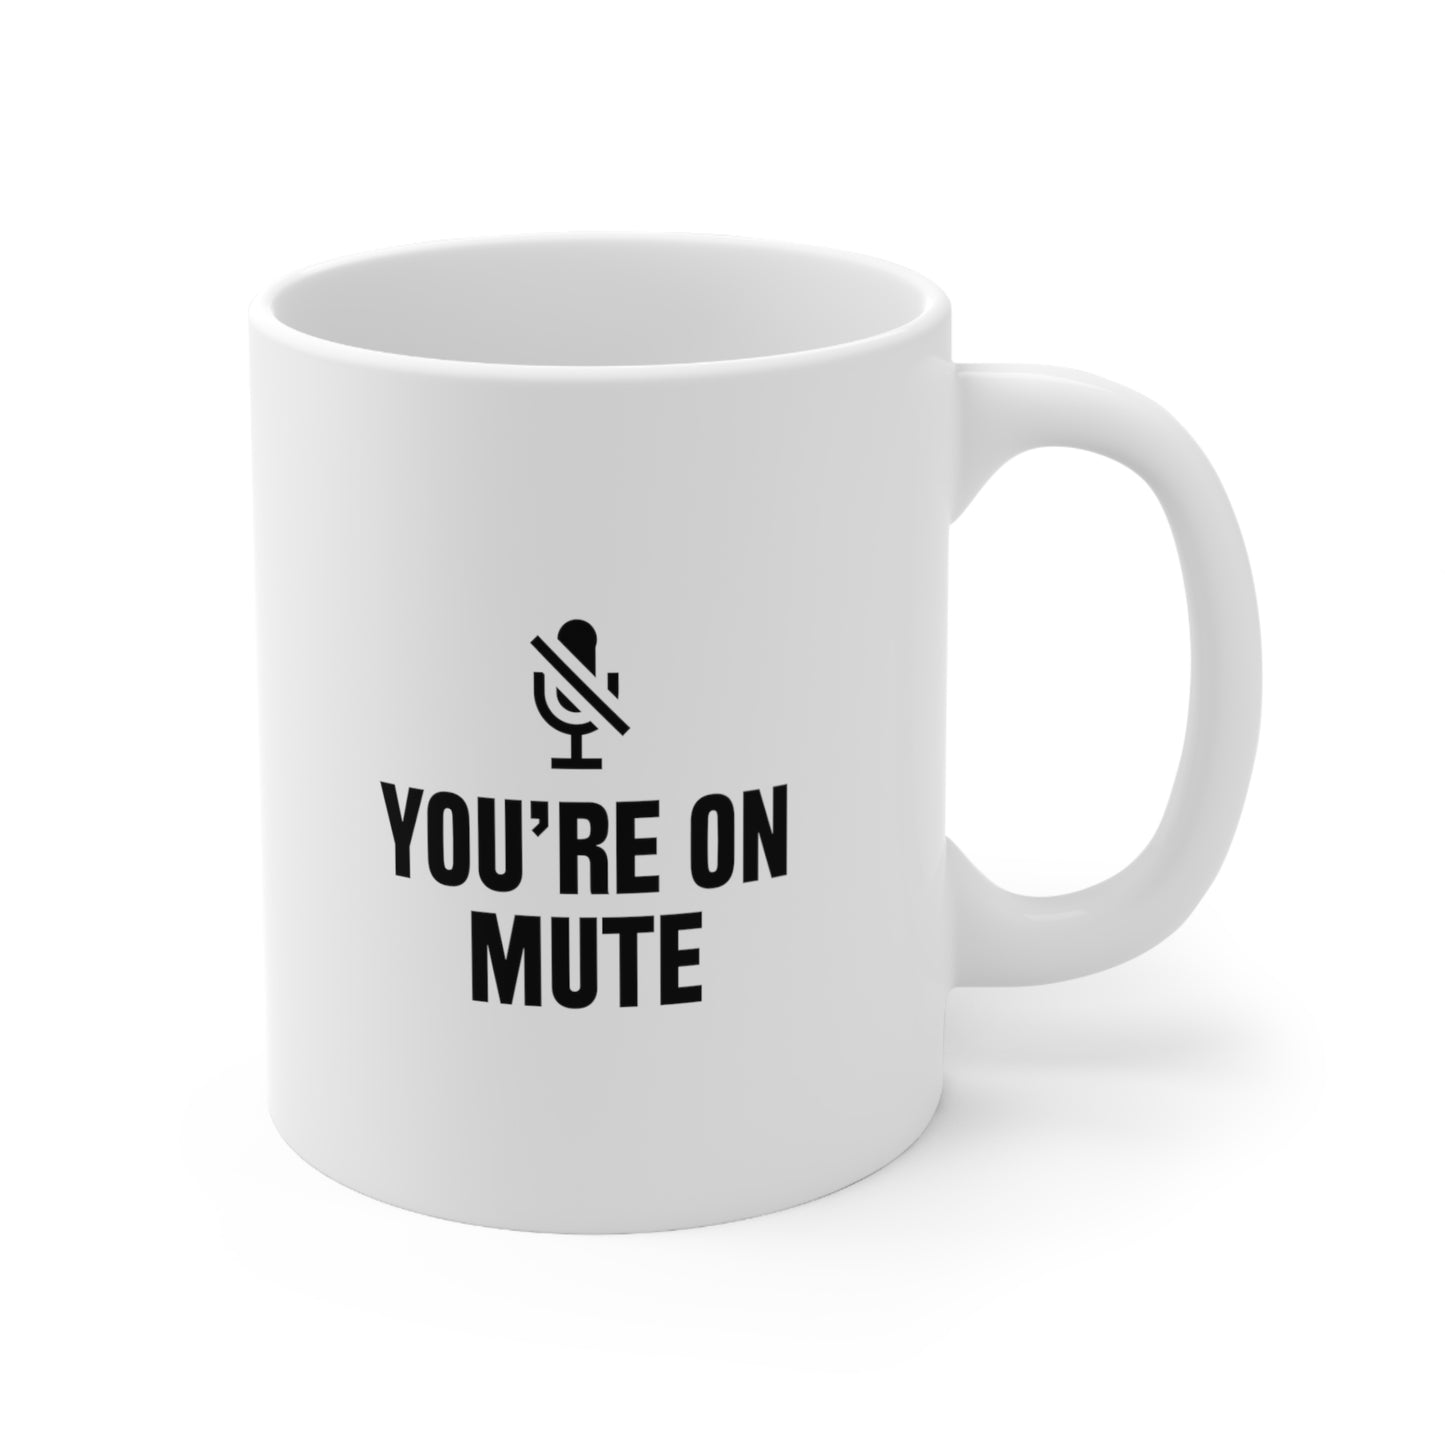 You're on mute Coffee Mug 11oz